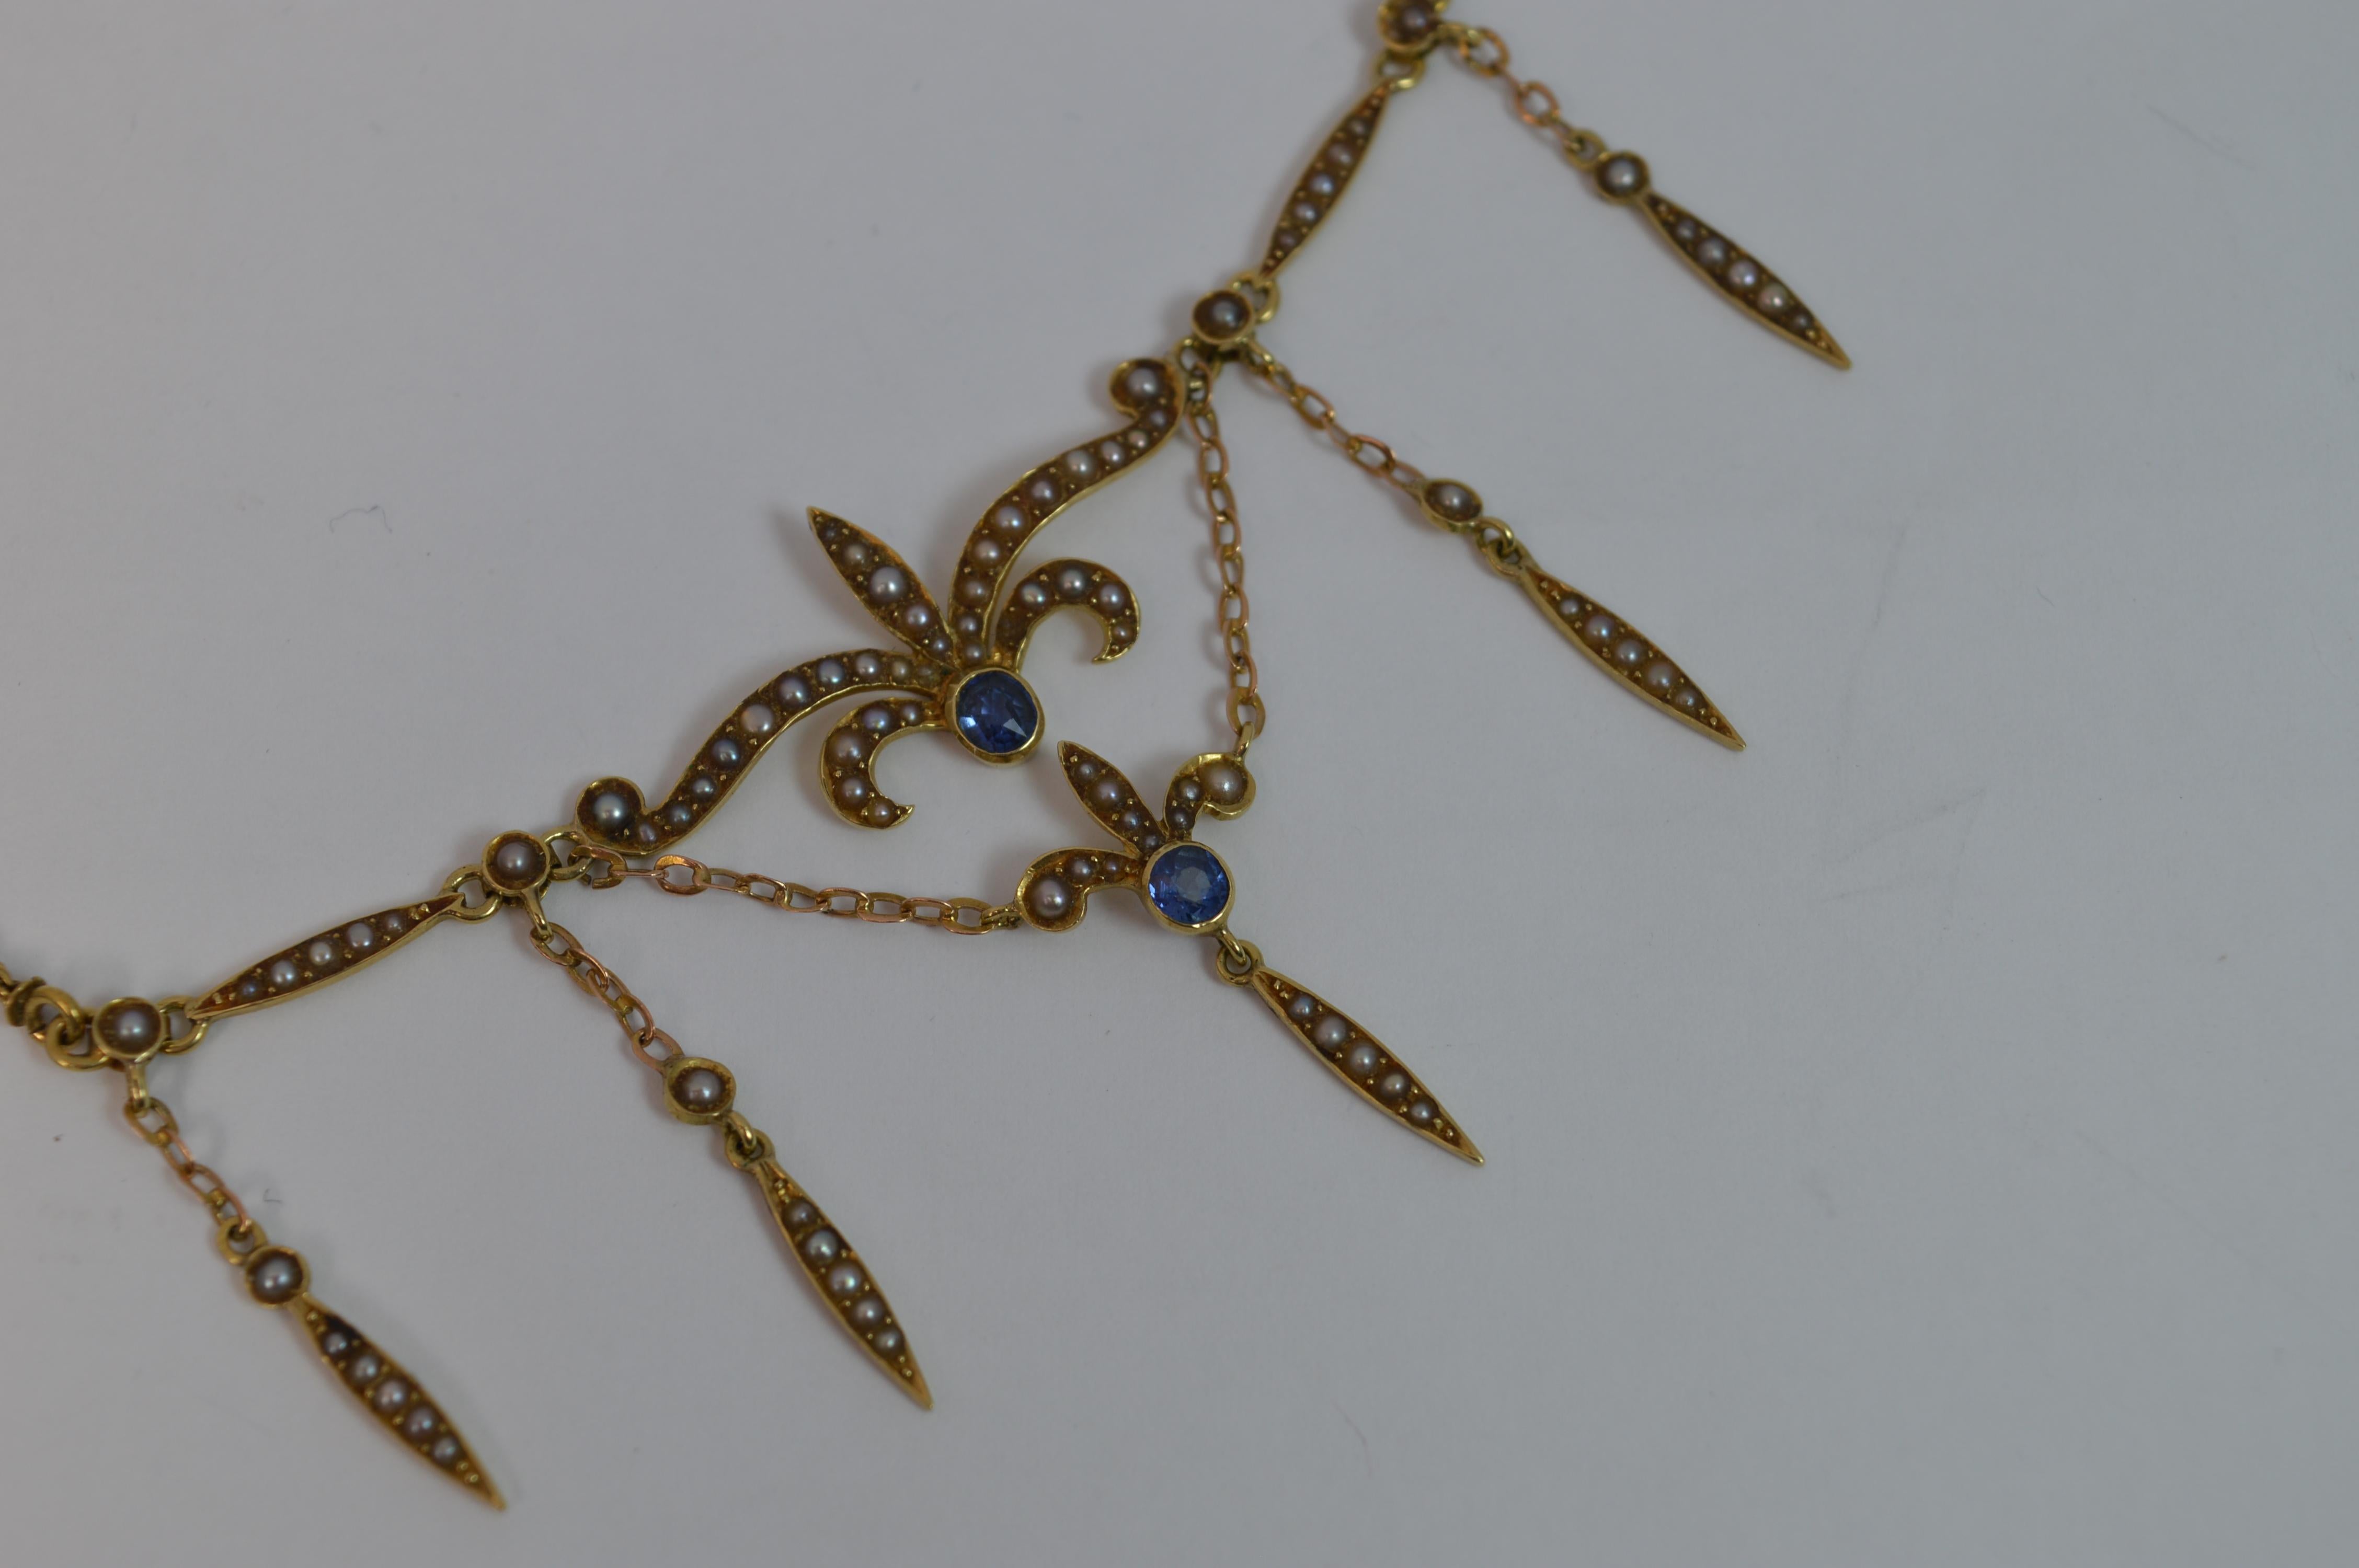 Edwardian Art Nouveau 15 Carat Gold Sapphire and Seed Pearl Long Necklace Pendant